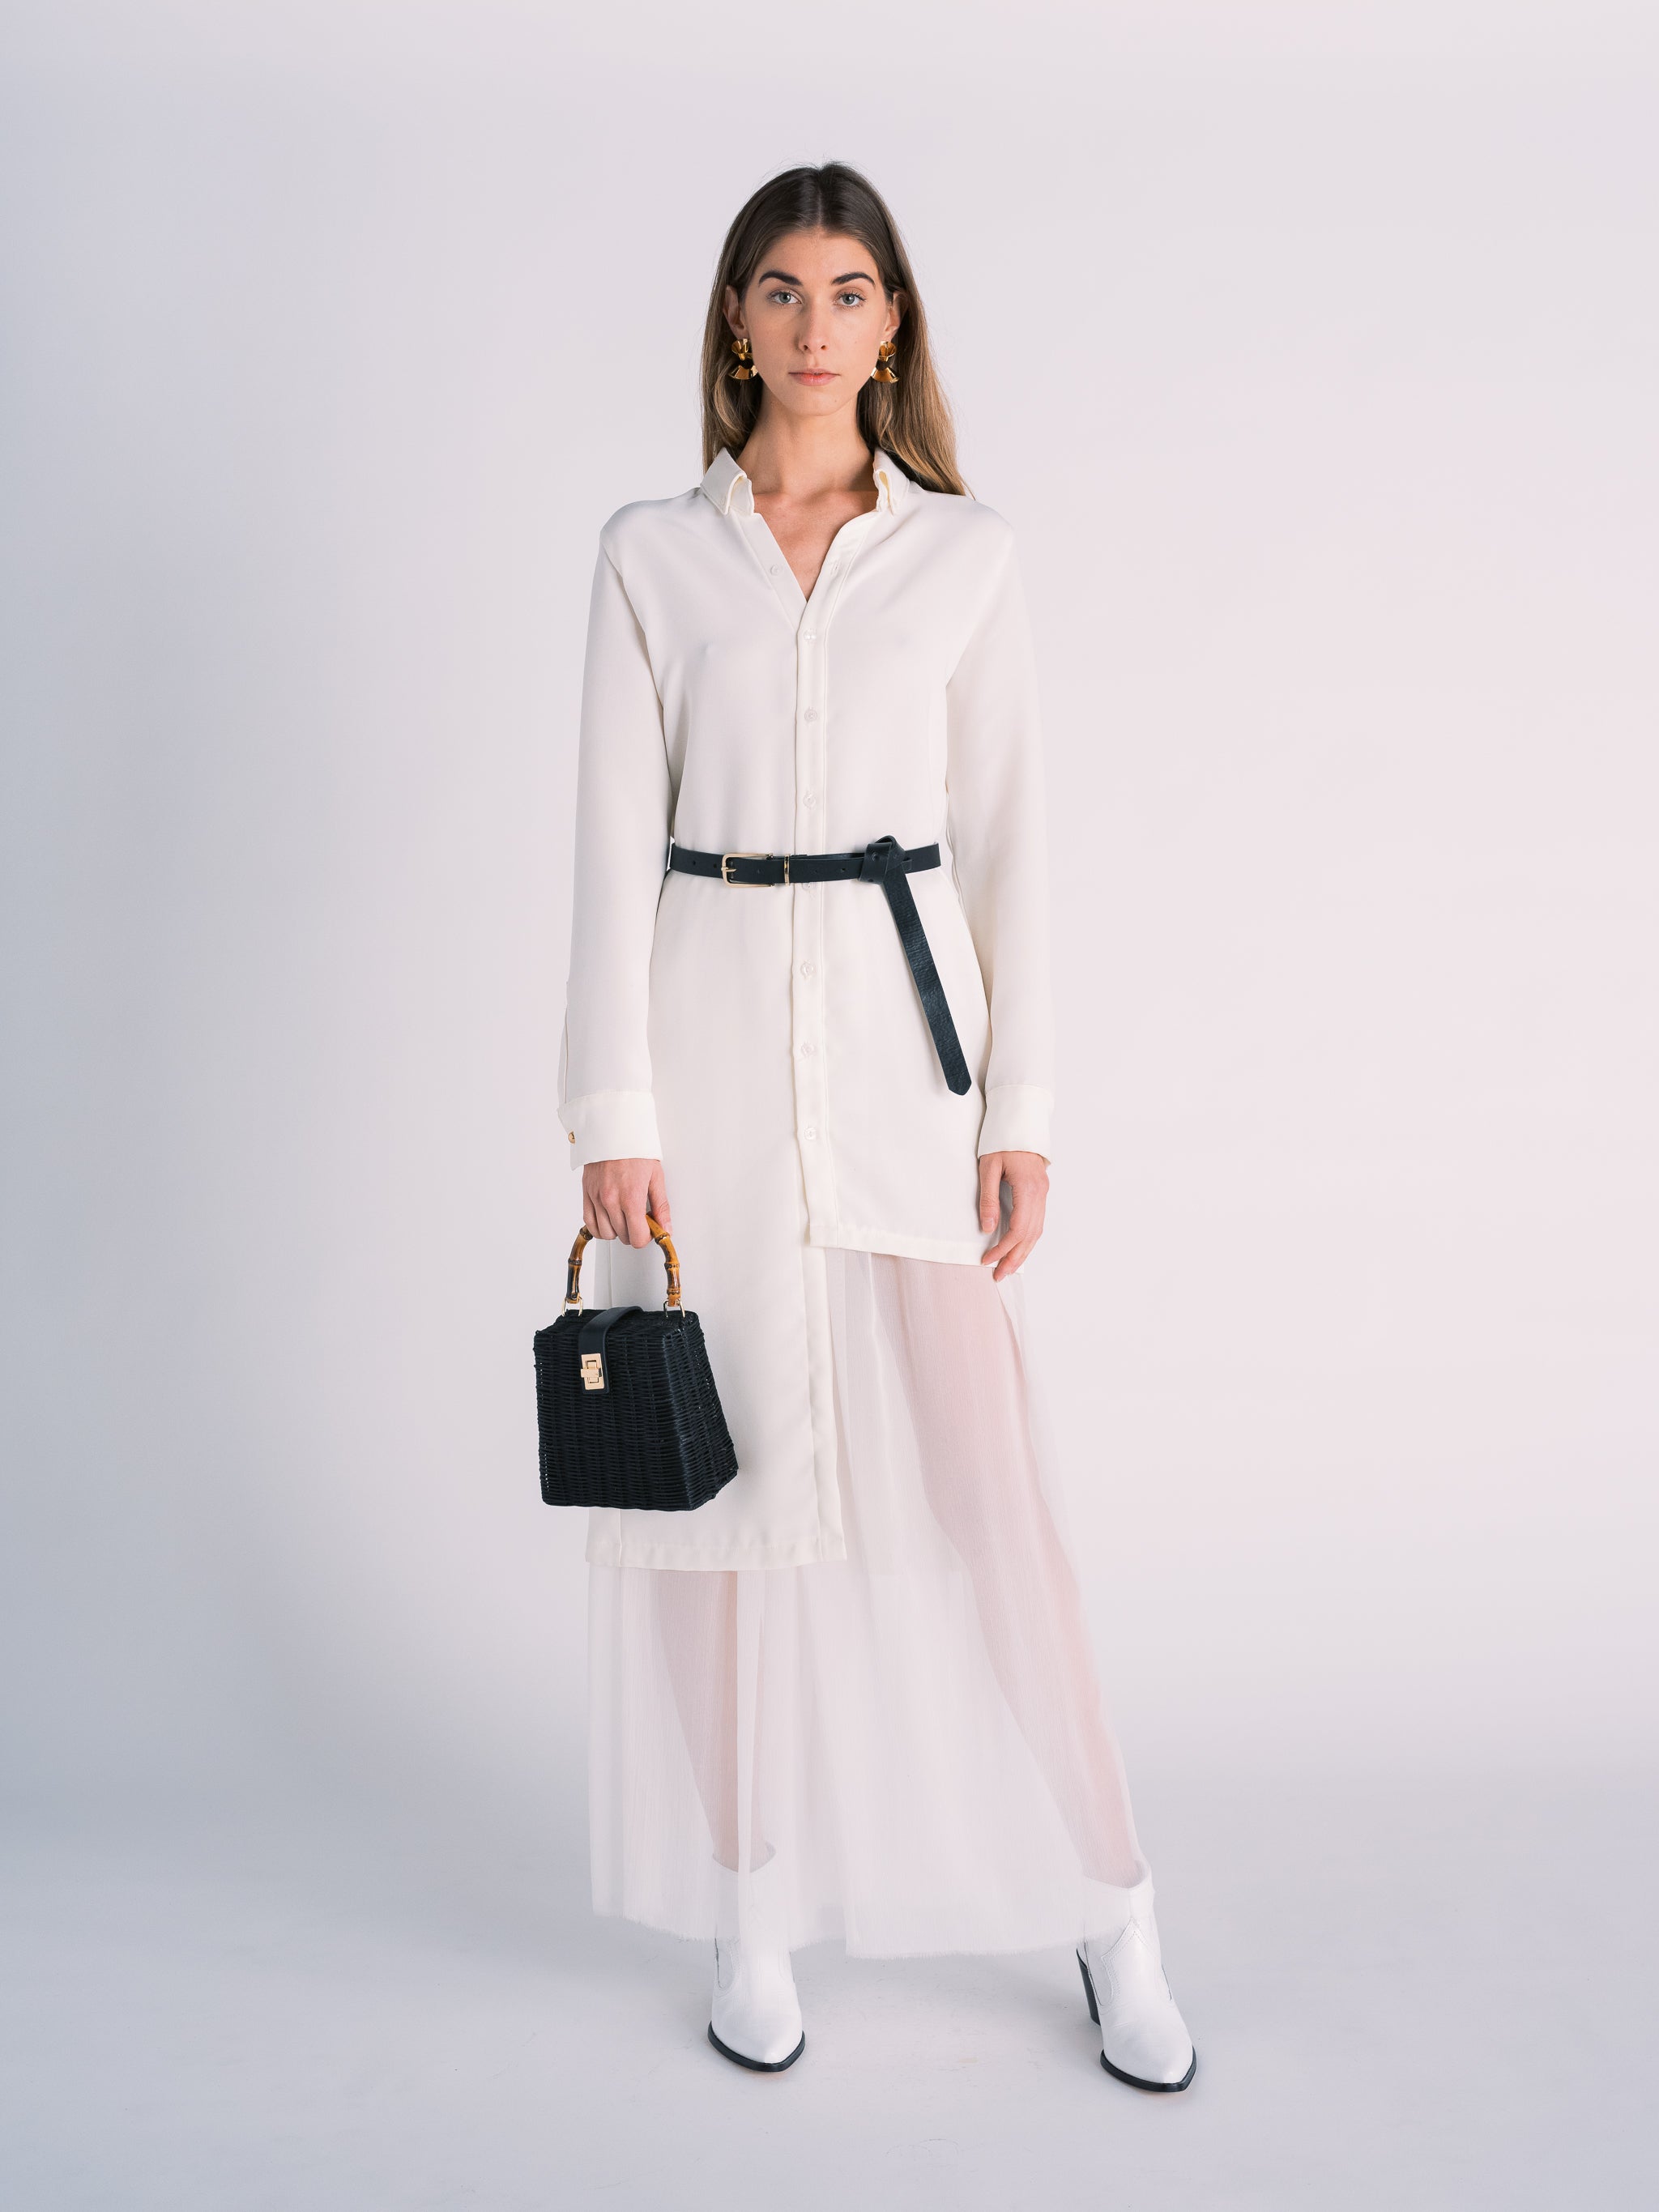 Asymmetric Collared Button Down Dress with Silk Slip Maxi Skirt in White